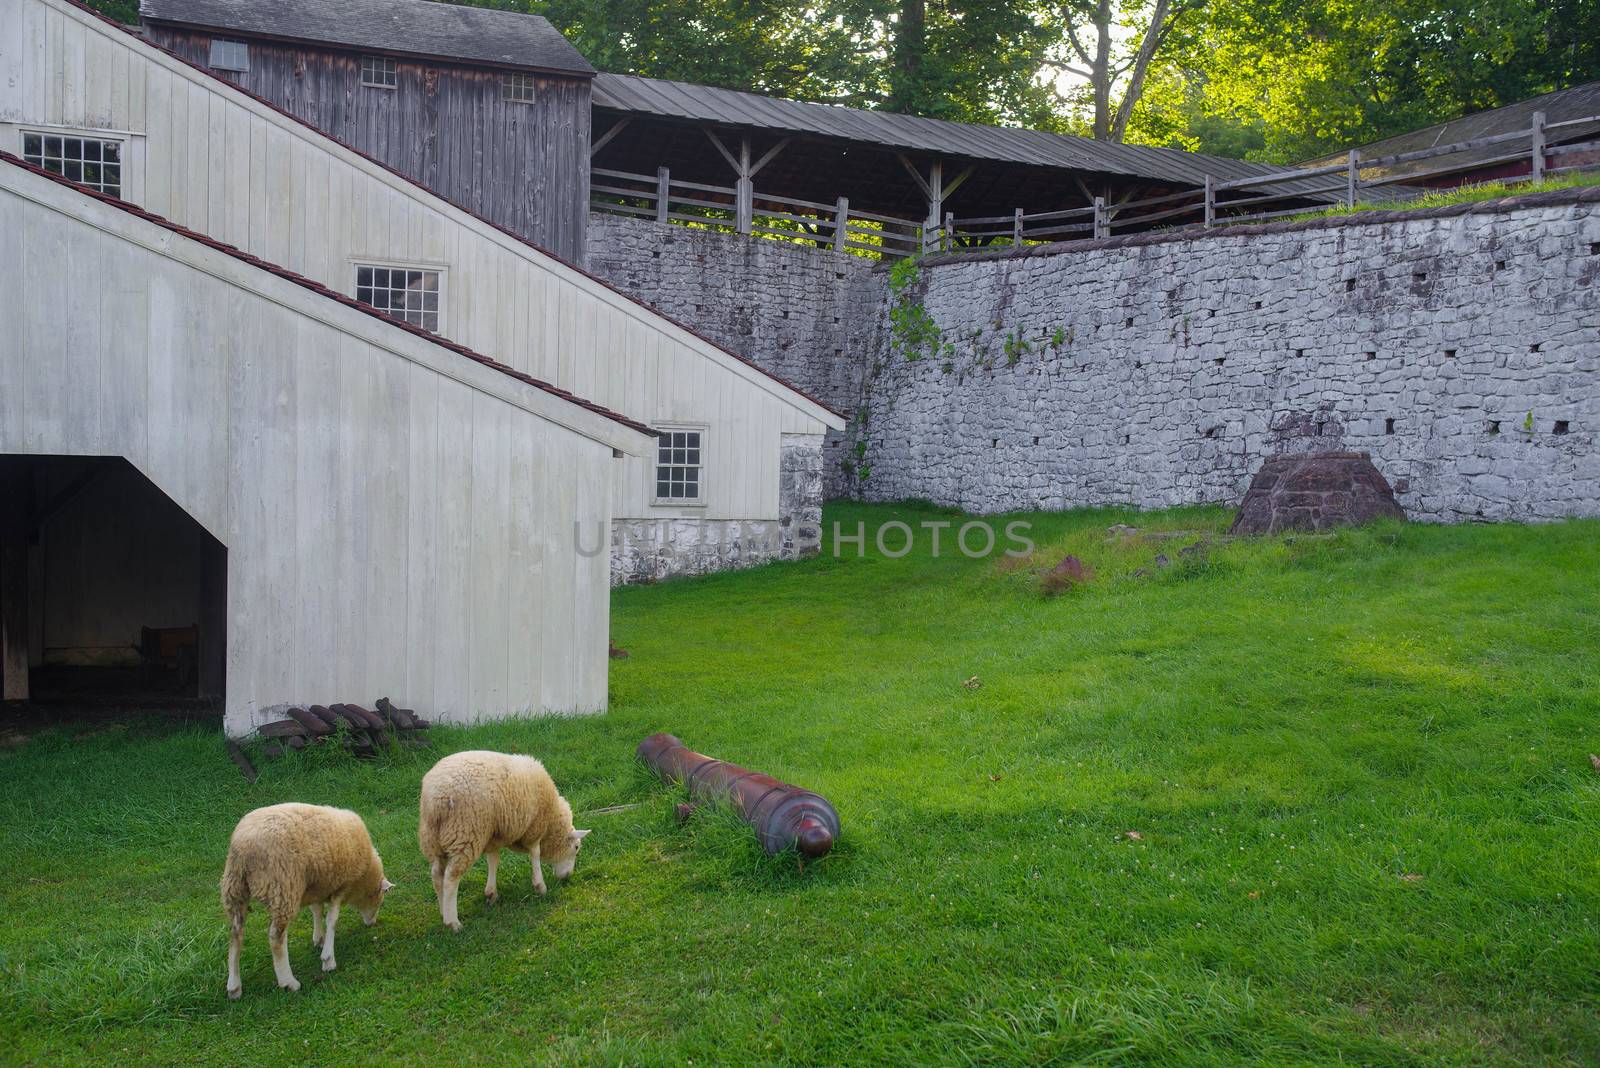 Sheep graze around overgrown cannon in idyllic colonial scene by marysalen